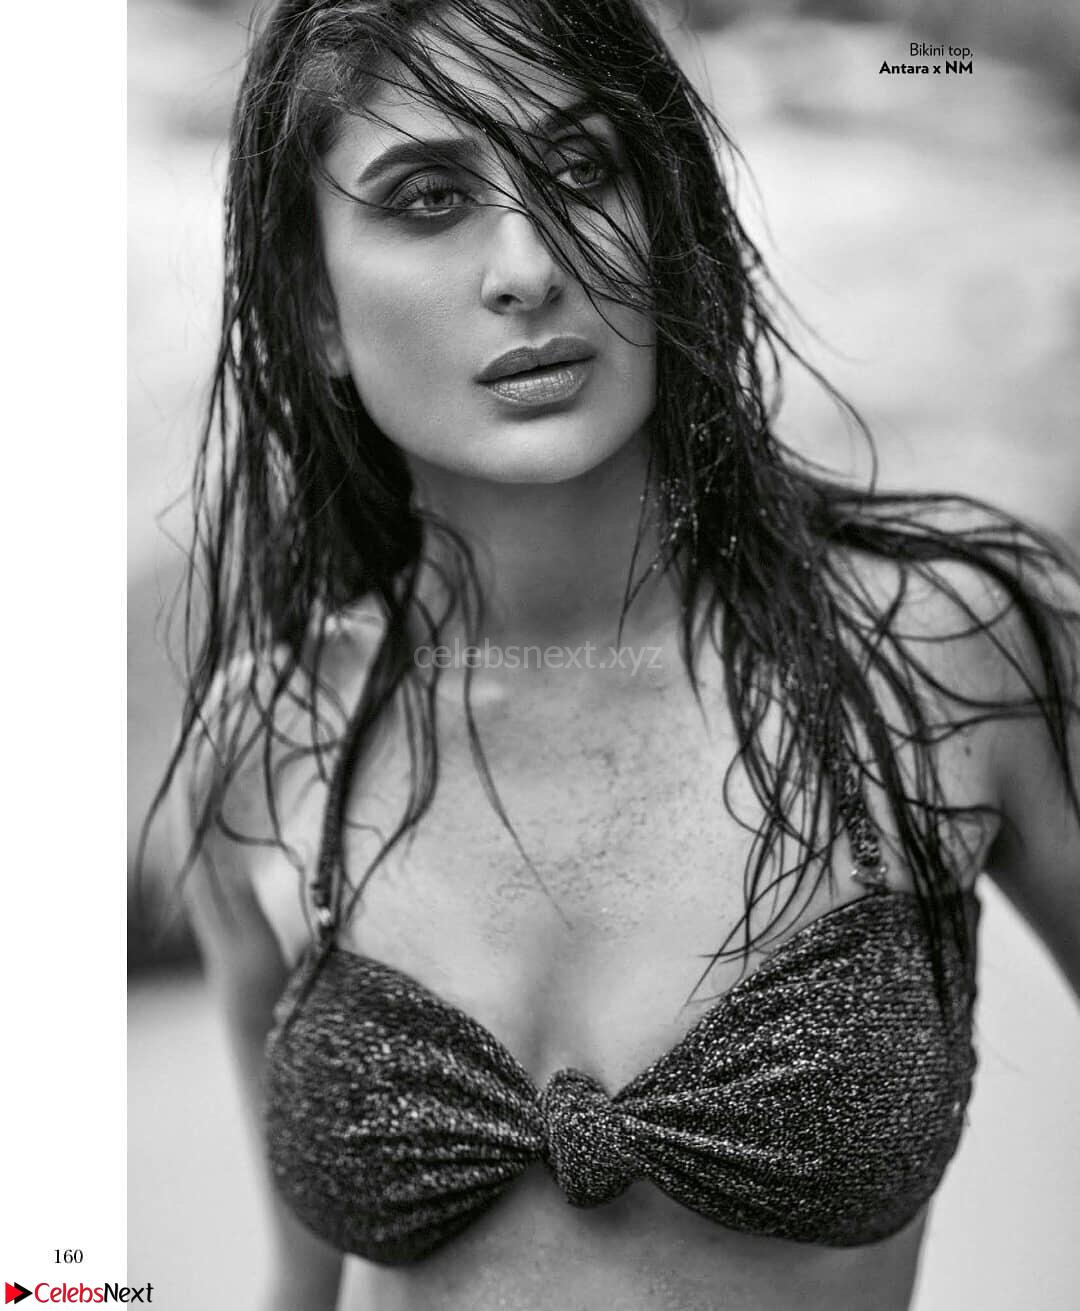 [Image: Kareena+Kapoor+in+Bikini+for+VOGUE+Janua...ry+005.jpg]